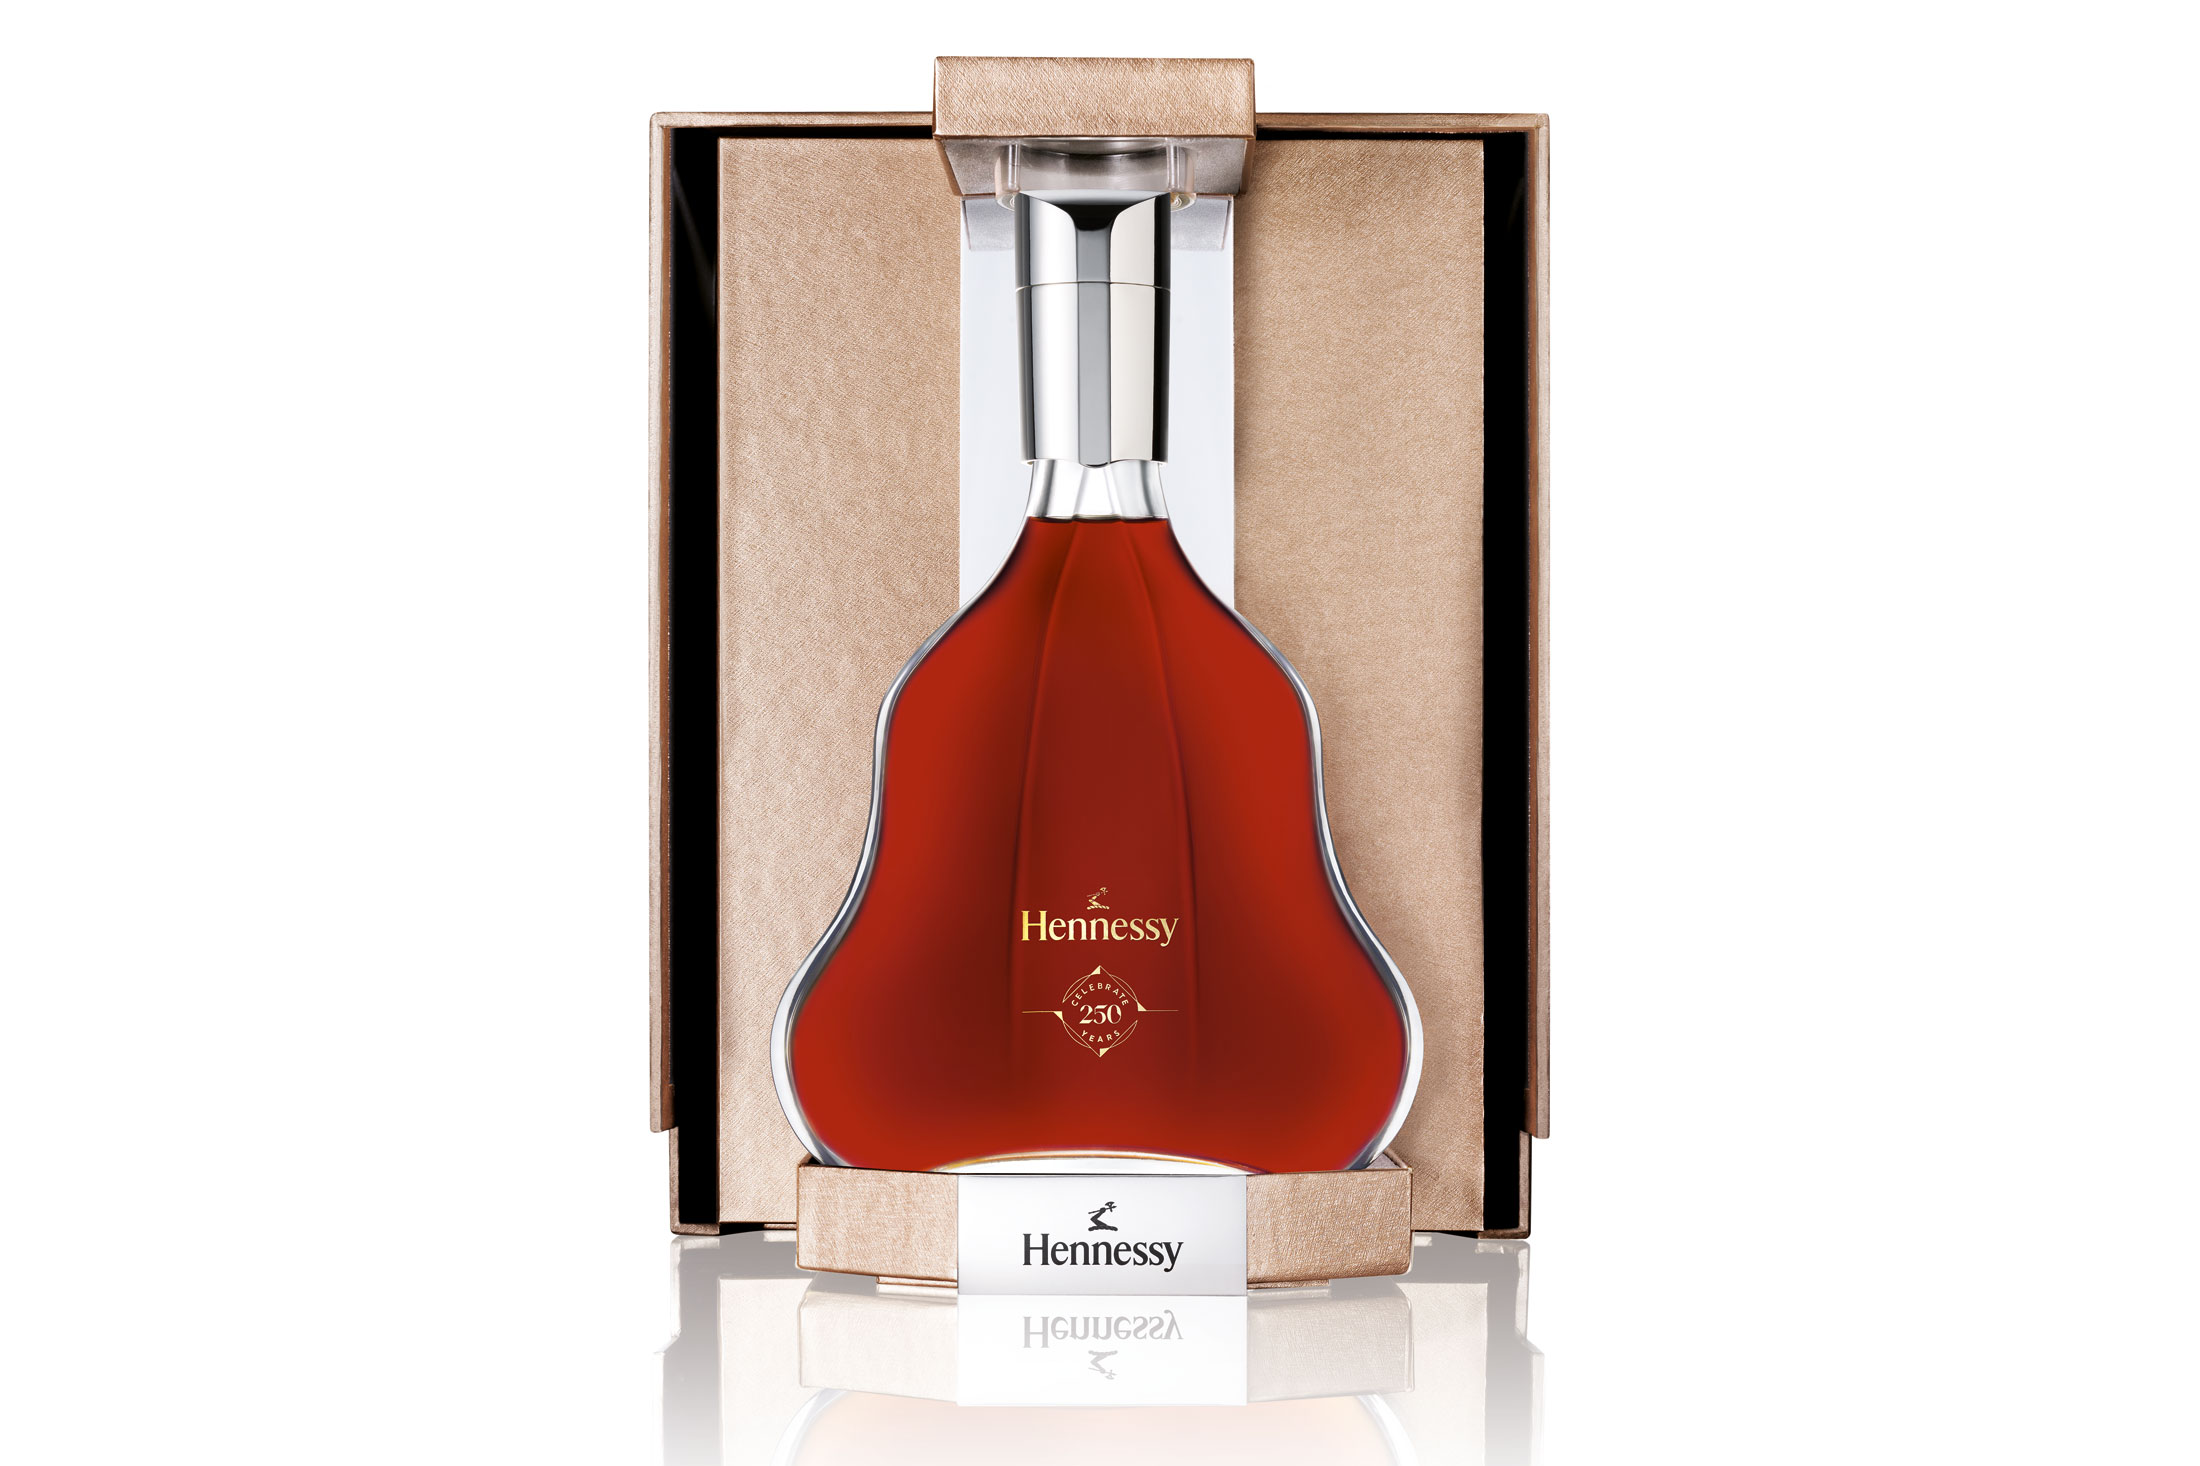 Hennessy Fine de Cognac 250 ans - Old Liquor Company